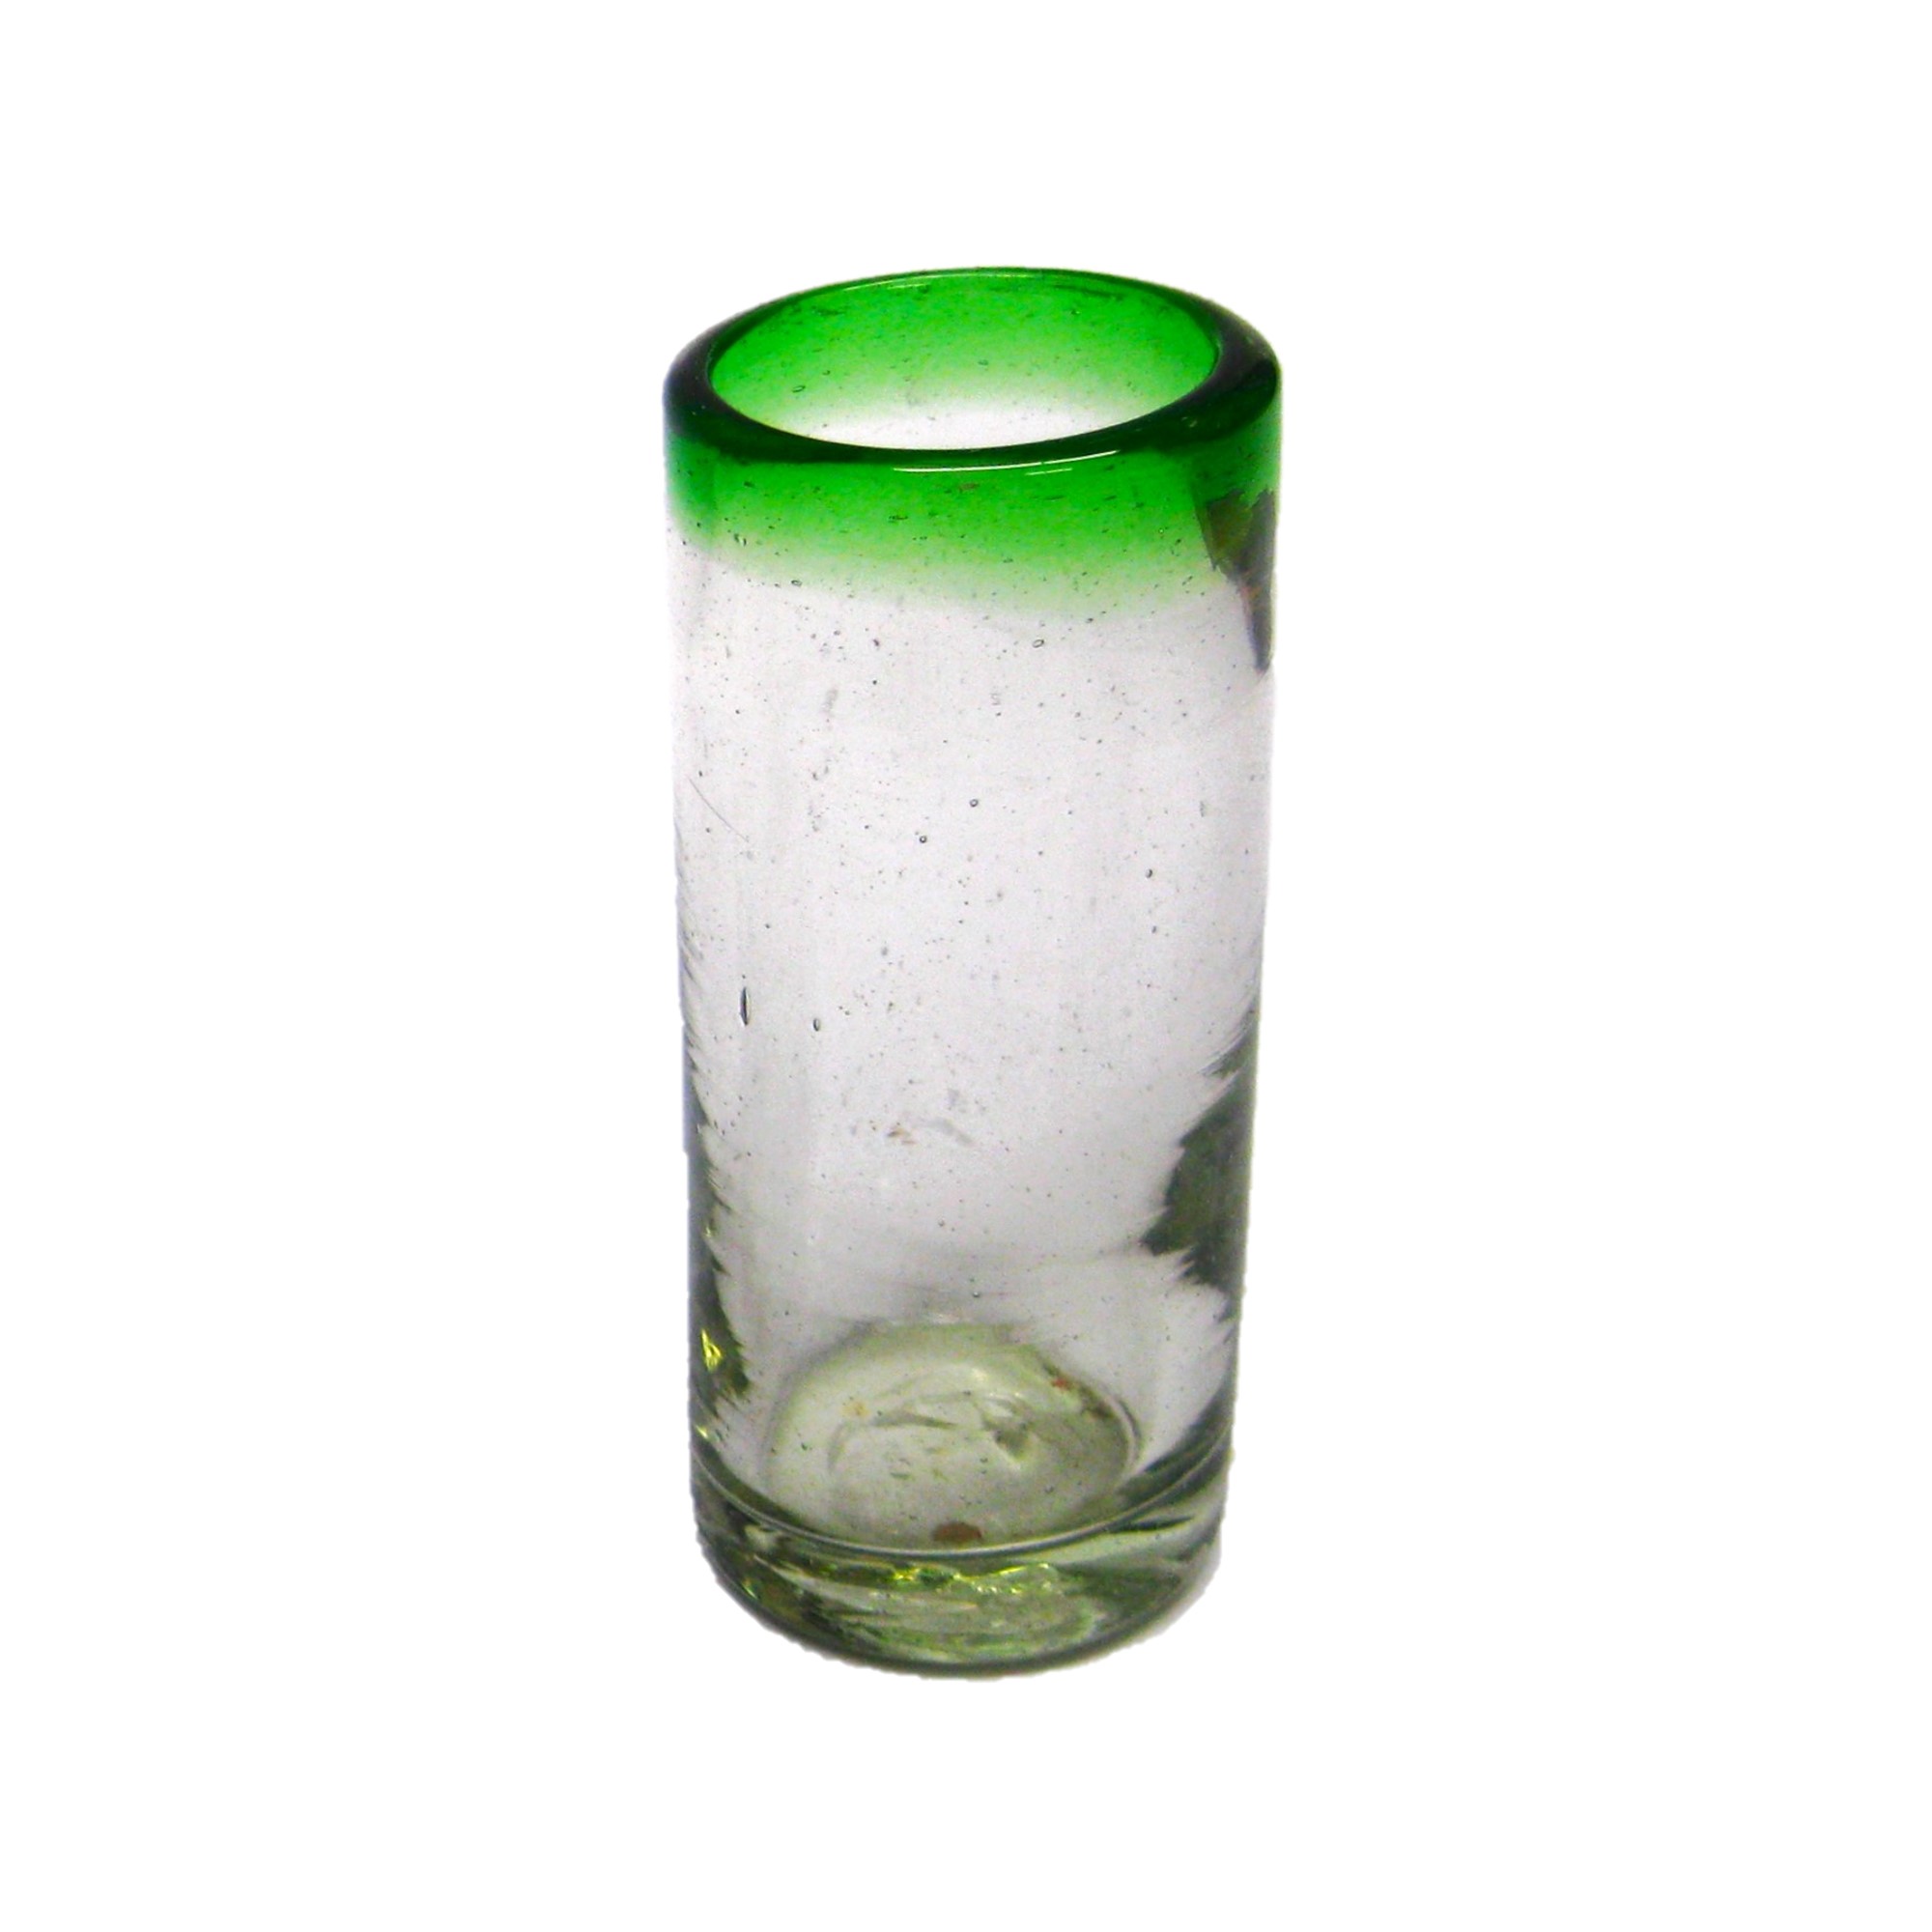 Emerald Green Rim 2 oz Tequila Shot Glasses (set of 6)